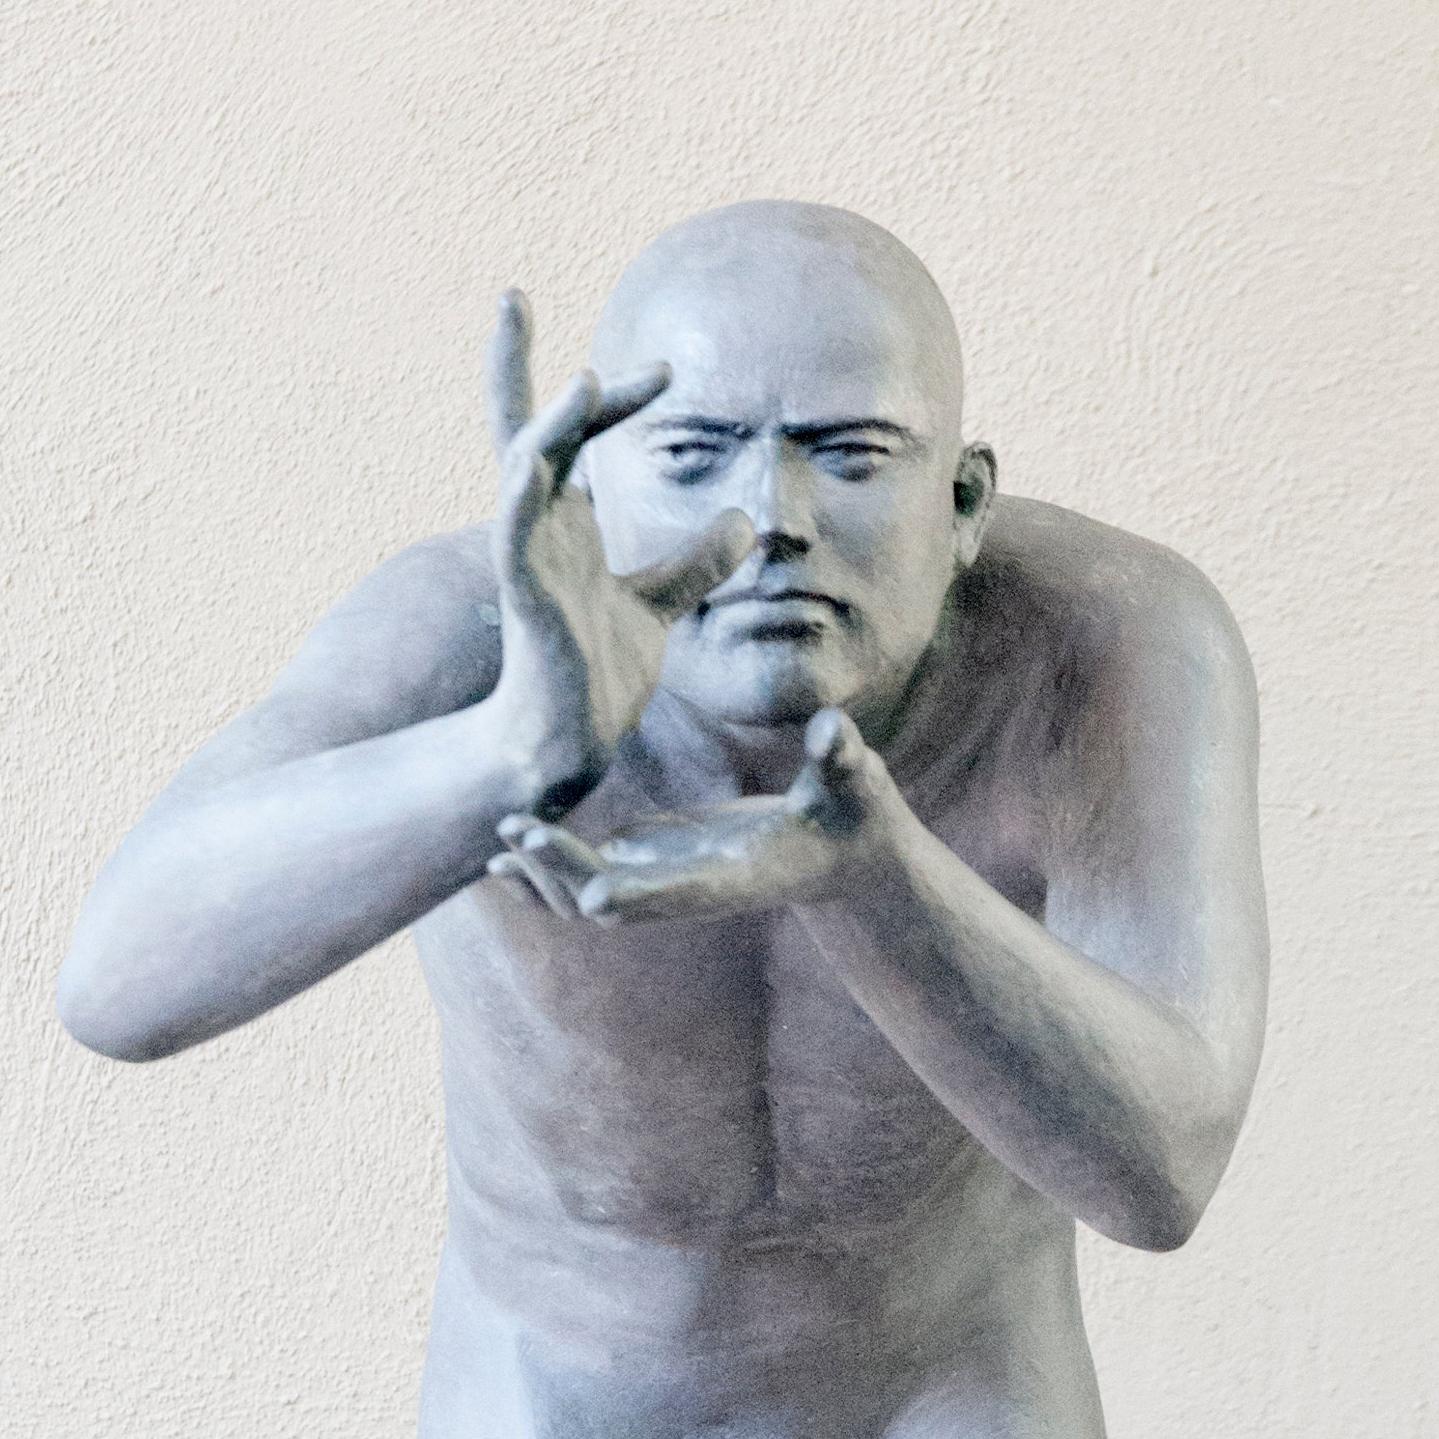 Fotografo II, sculpture figurative en bronze et acier inoxydable - Sculpture de Aurora Canero